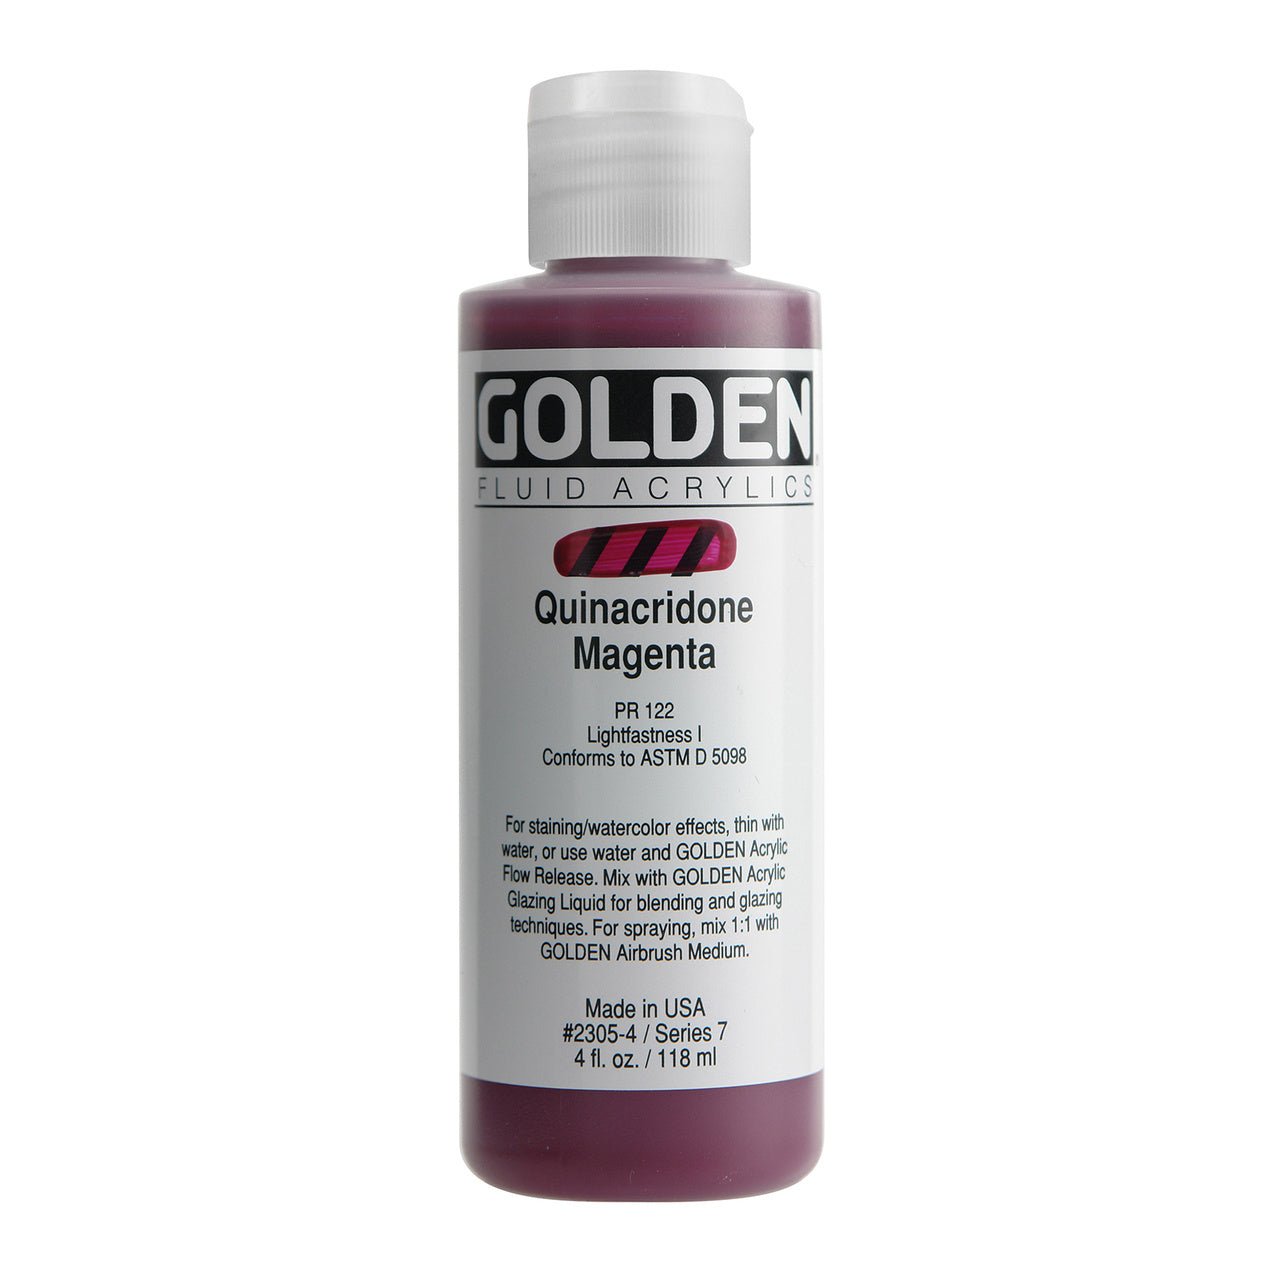 Golden Fluid Acrylic Quinacridone Magenta 4 oz - merriartist.com